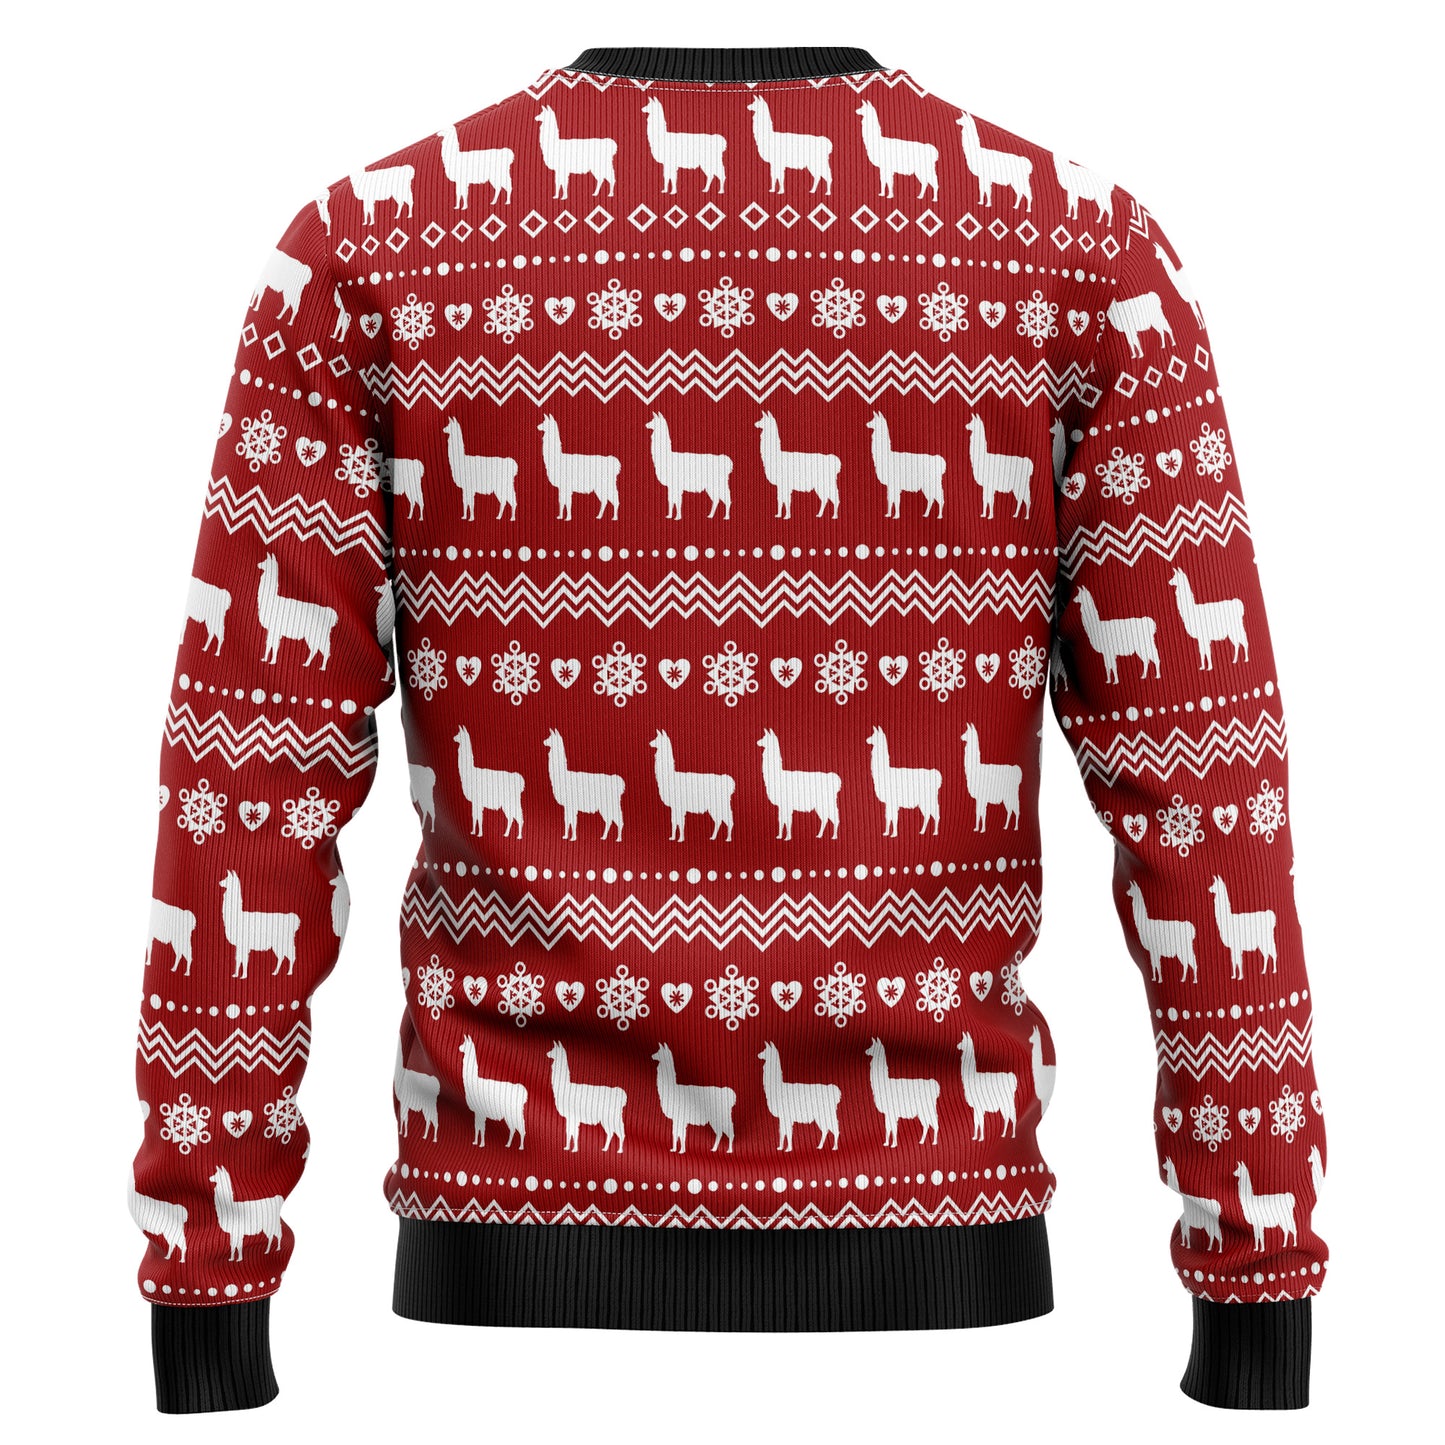 Llama La La HZ101611 Ugly Christmas Sweater